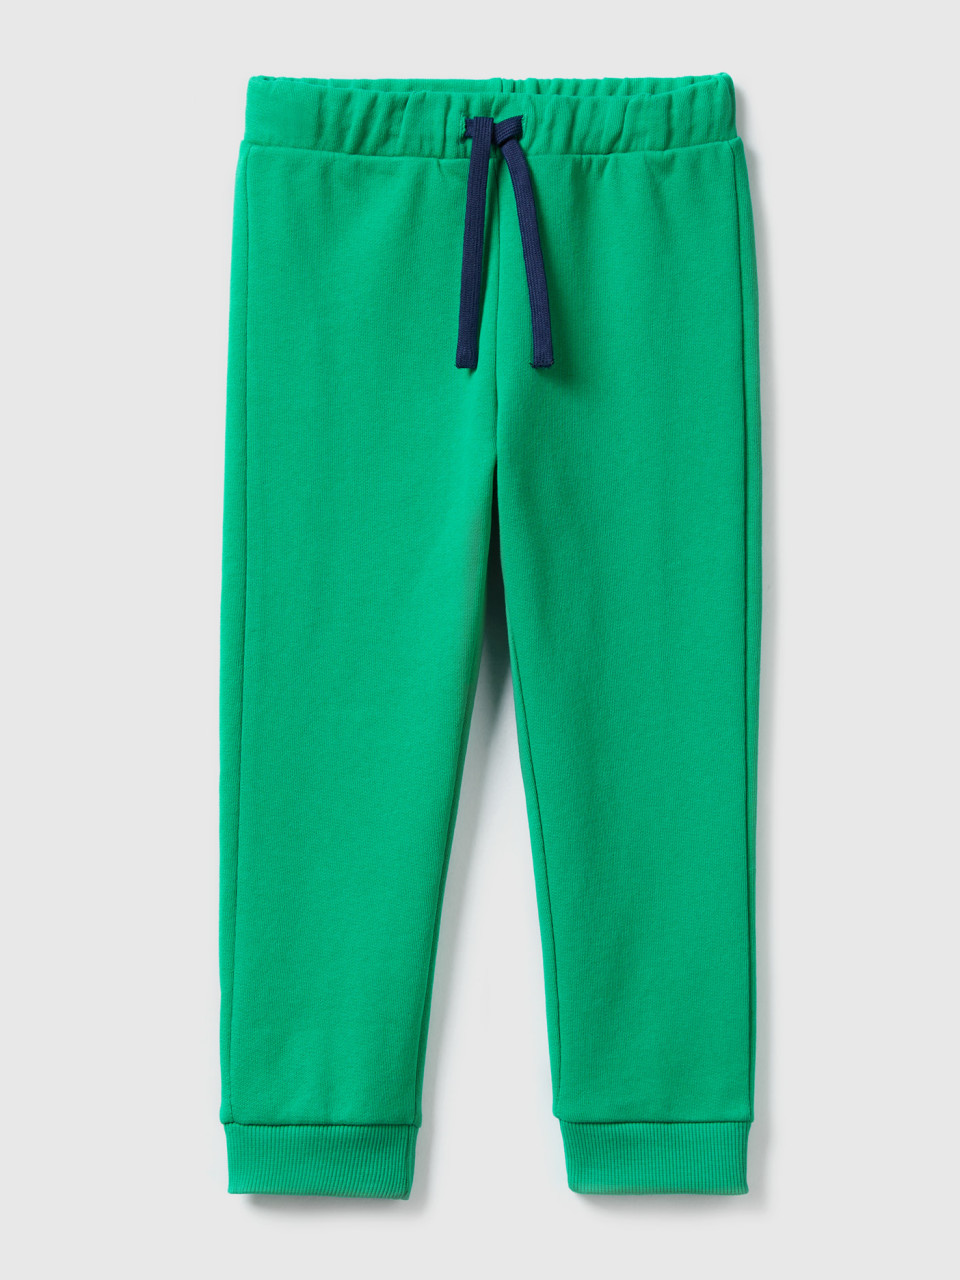 Benetton, Sweatpants With Pocket, Green, Kids